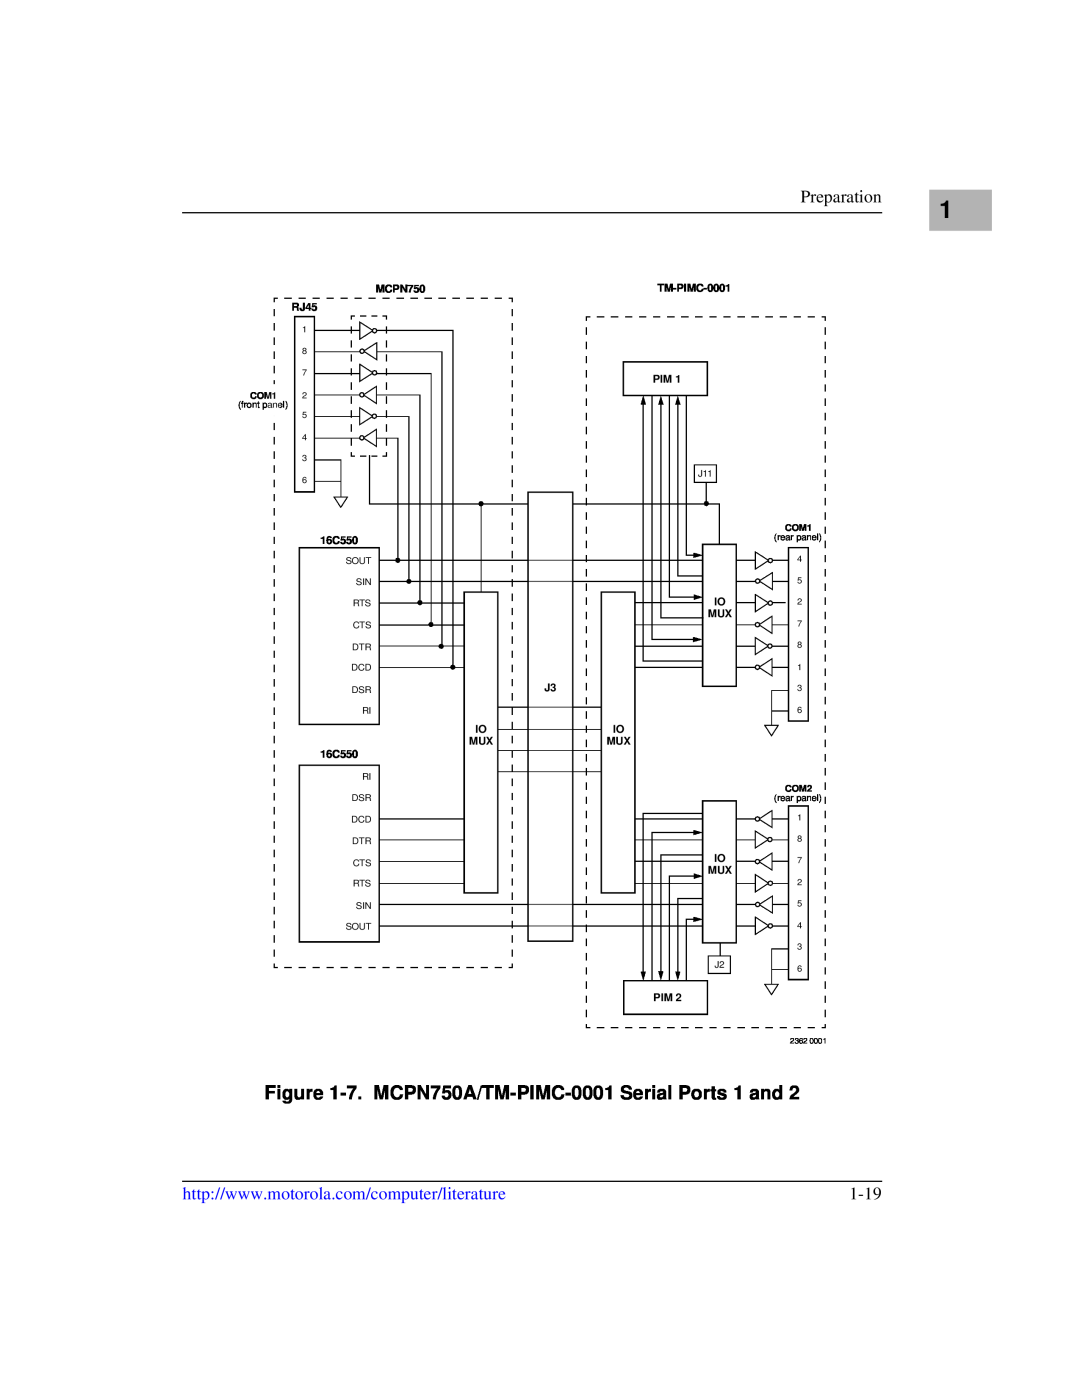 Motorola IH5 manual 7. MCPN750A/TM-PIMC-0001 Serial Ports 1 and, RJ45, 16C550 